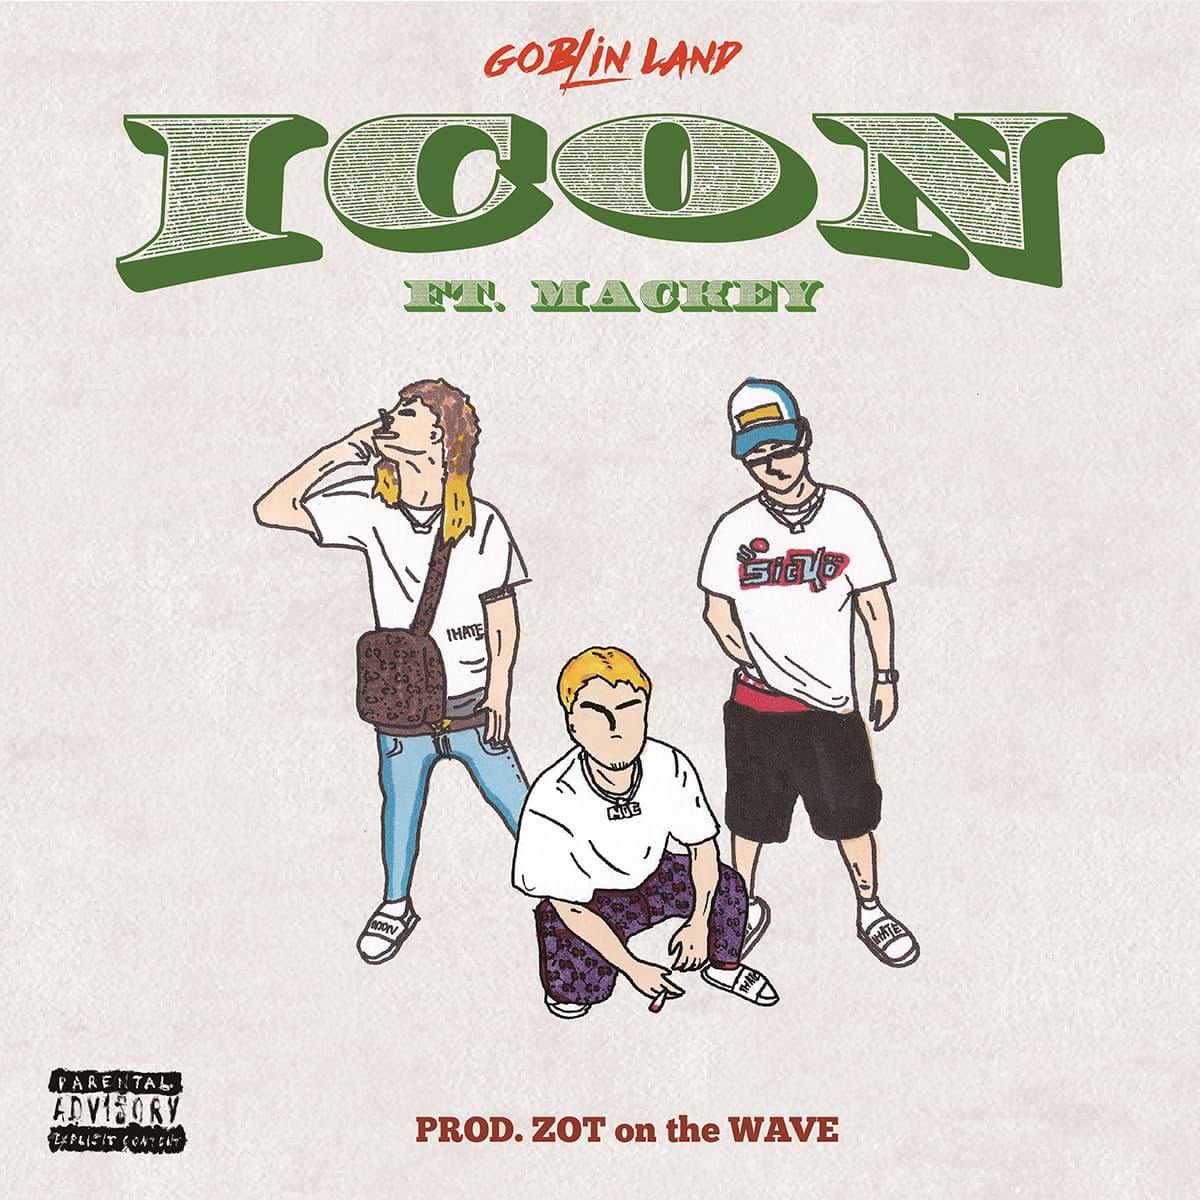 GOBLIN LAND Digital Single “icon feat. Mackey” Release